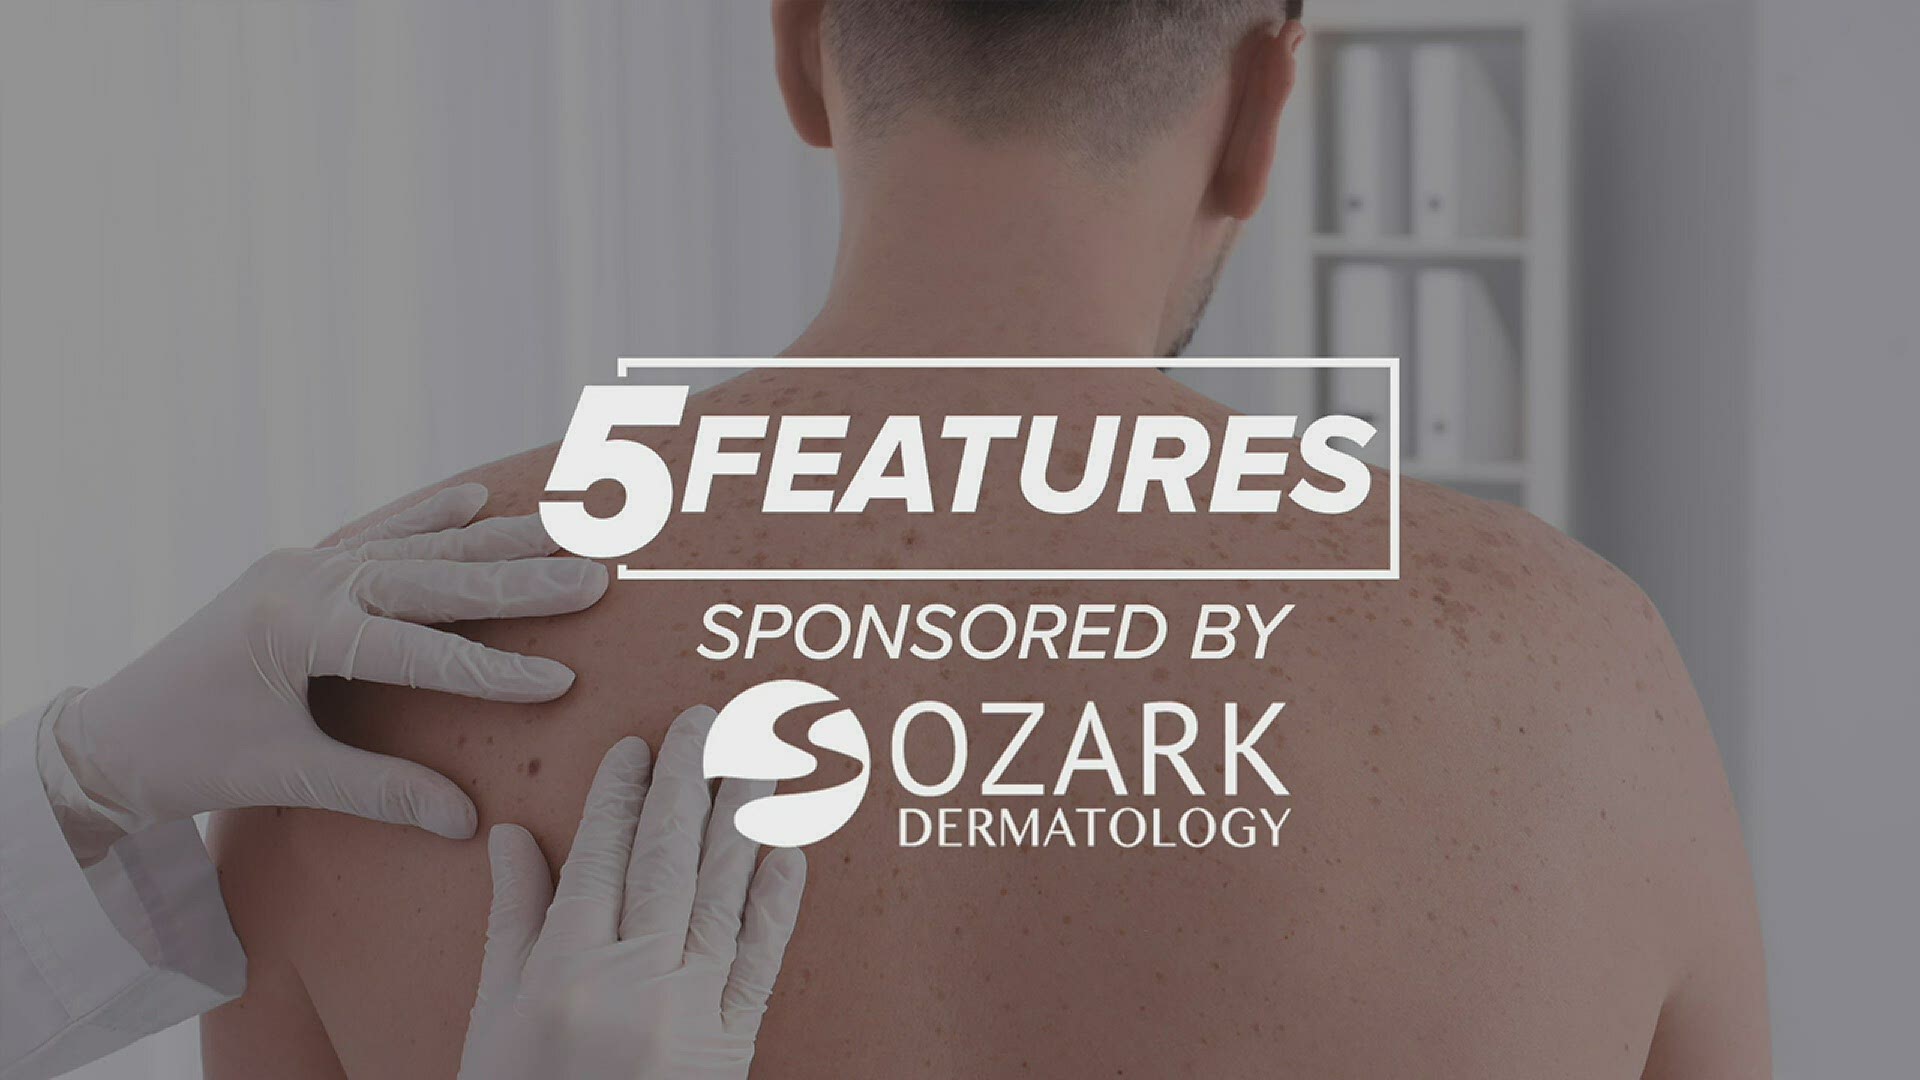 Sponsored by: Ozark Dermatology